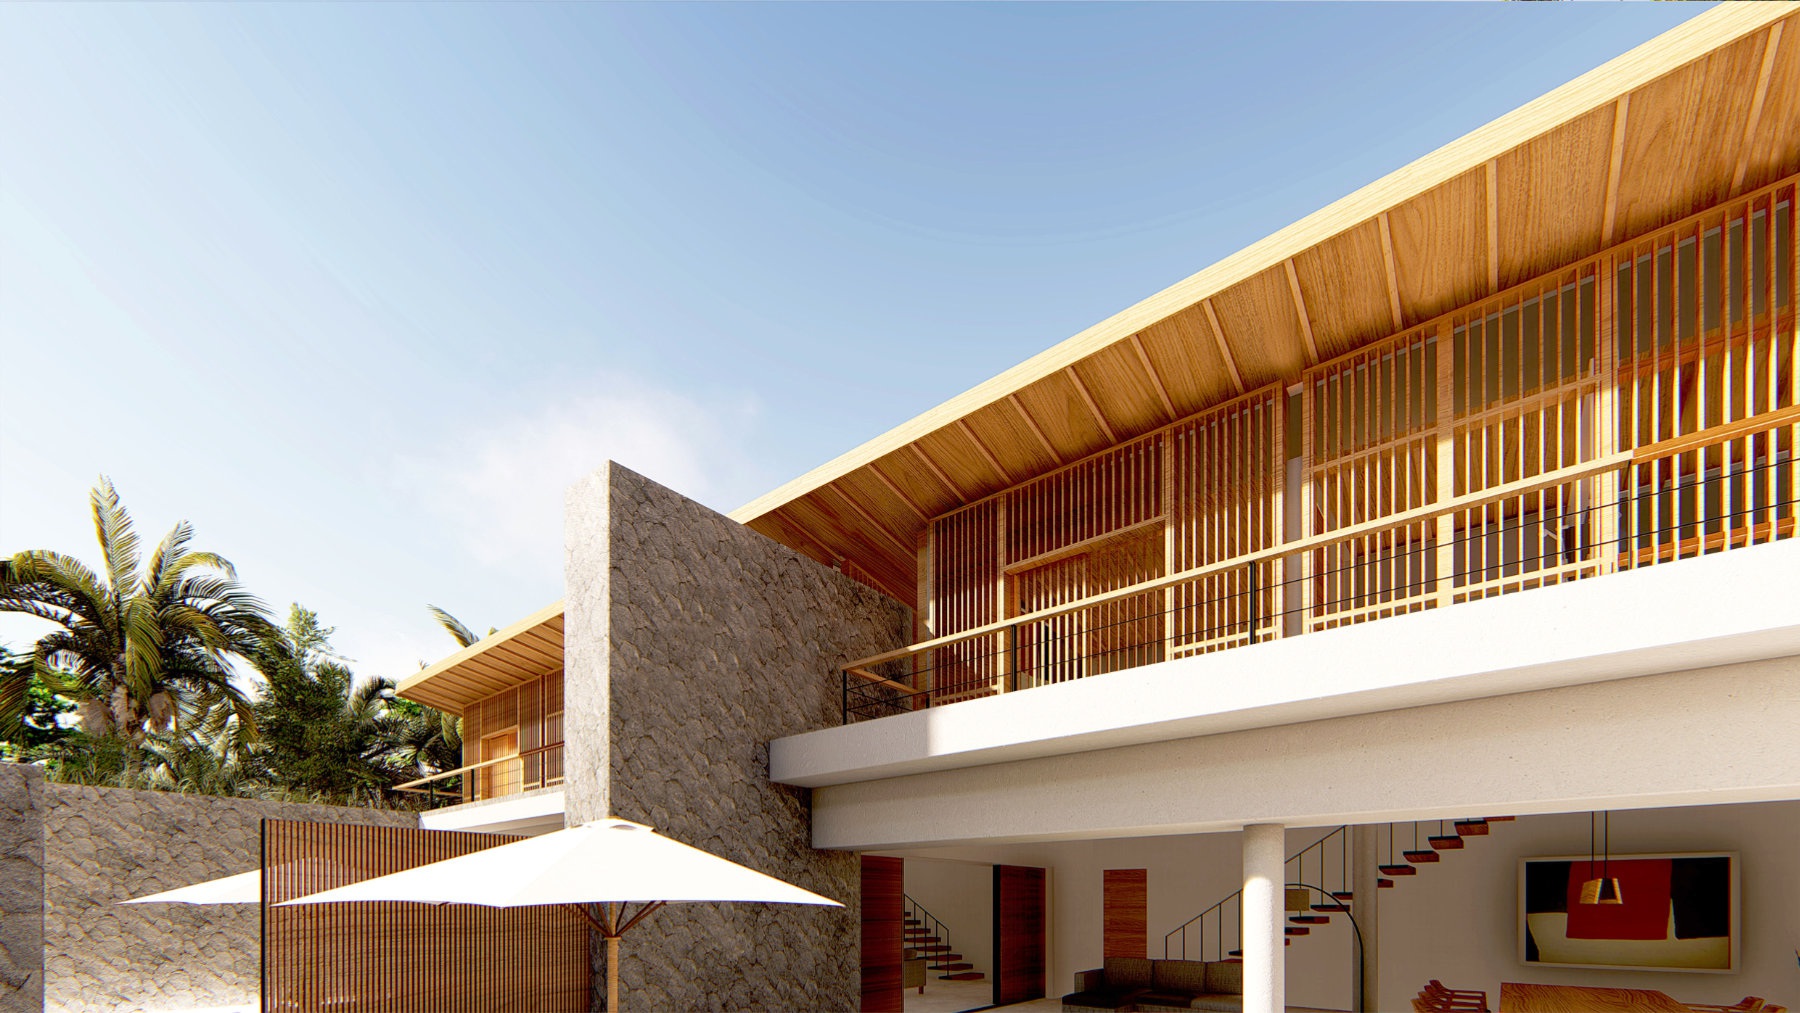 Design Assembly - Nelayan Villas - Bali Architect - Interior Design - Bali Villa - Wooden Facade